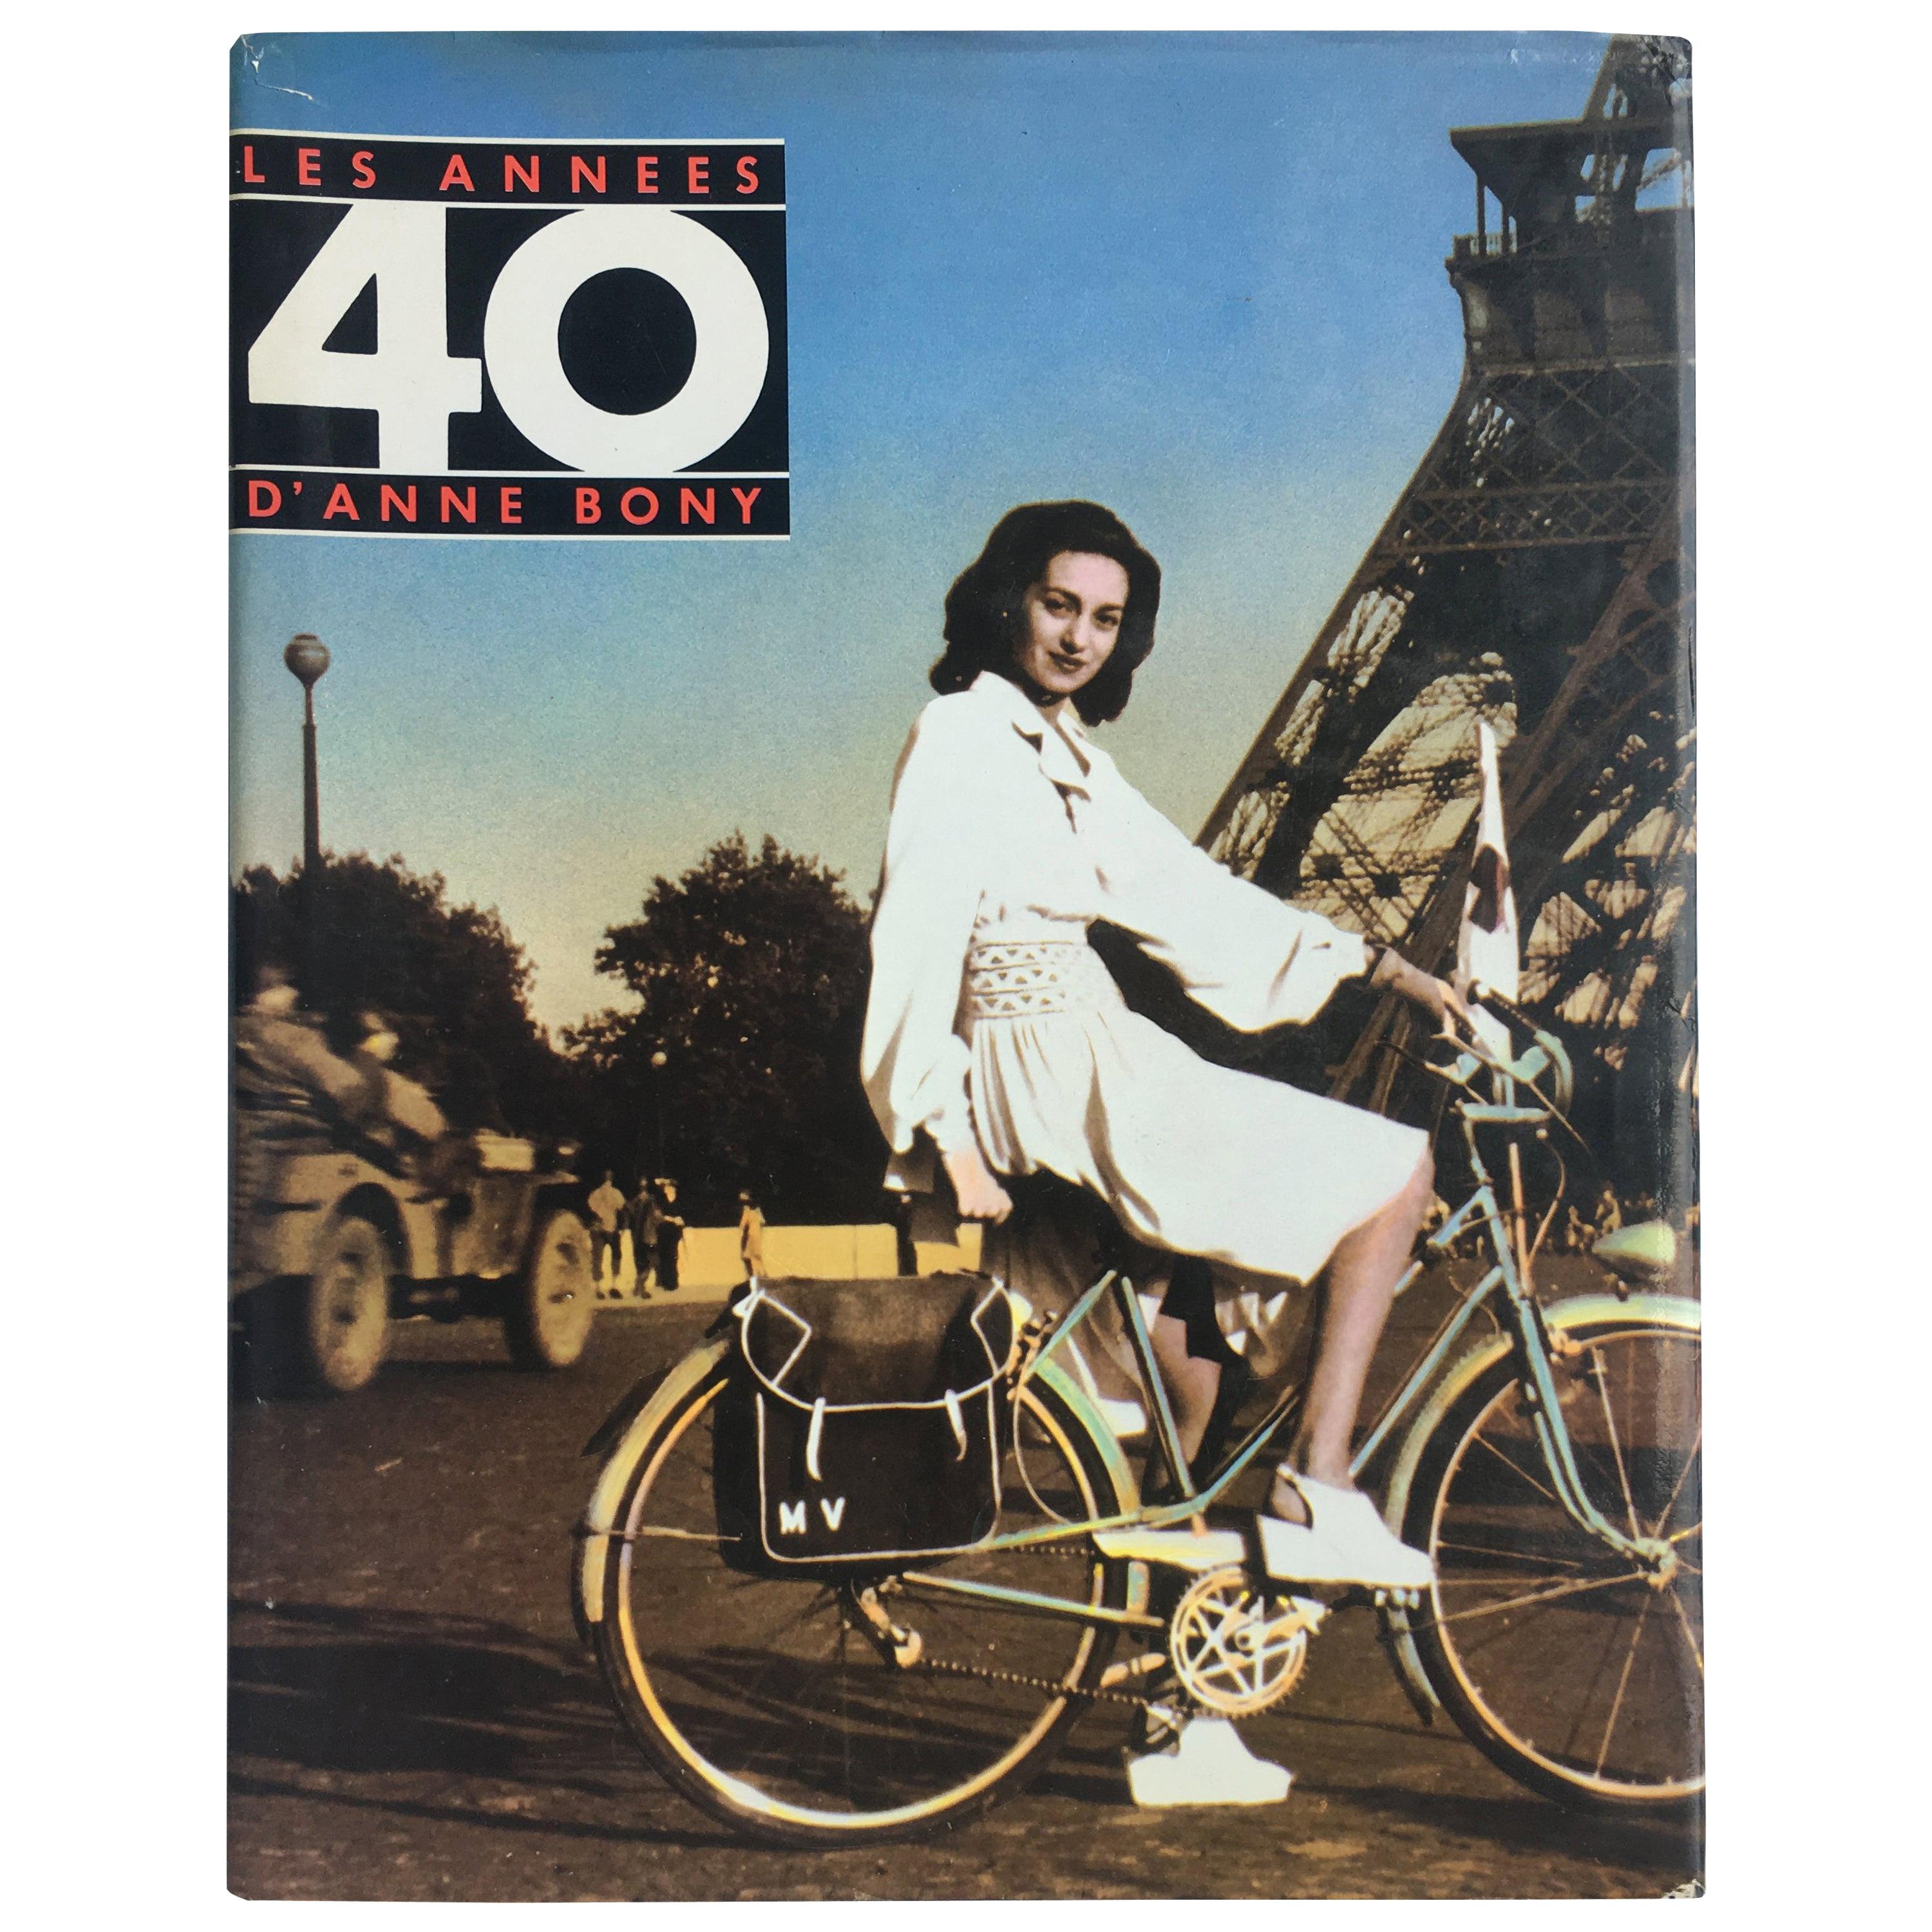 Les Annees 40, Anne Bony For Sale